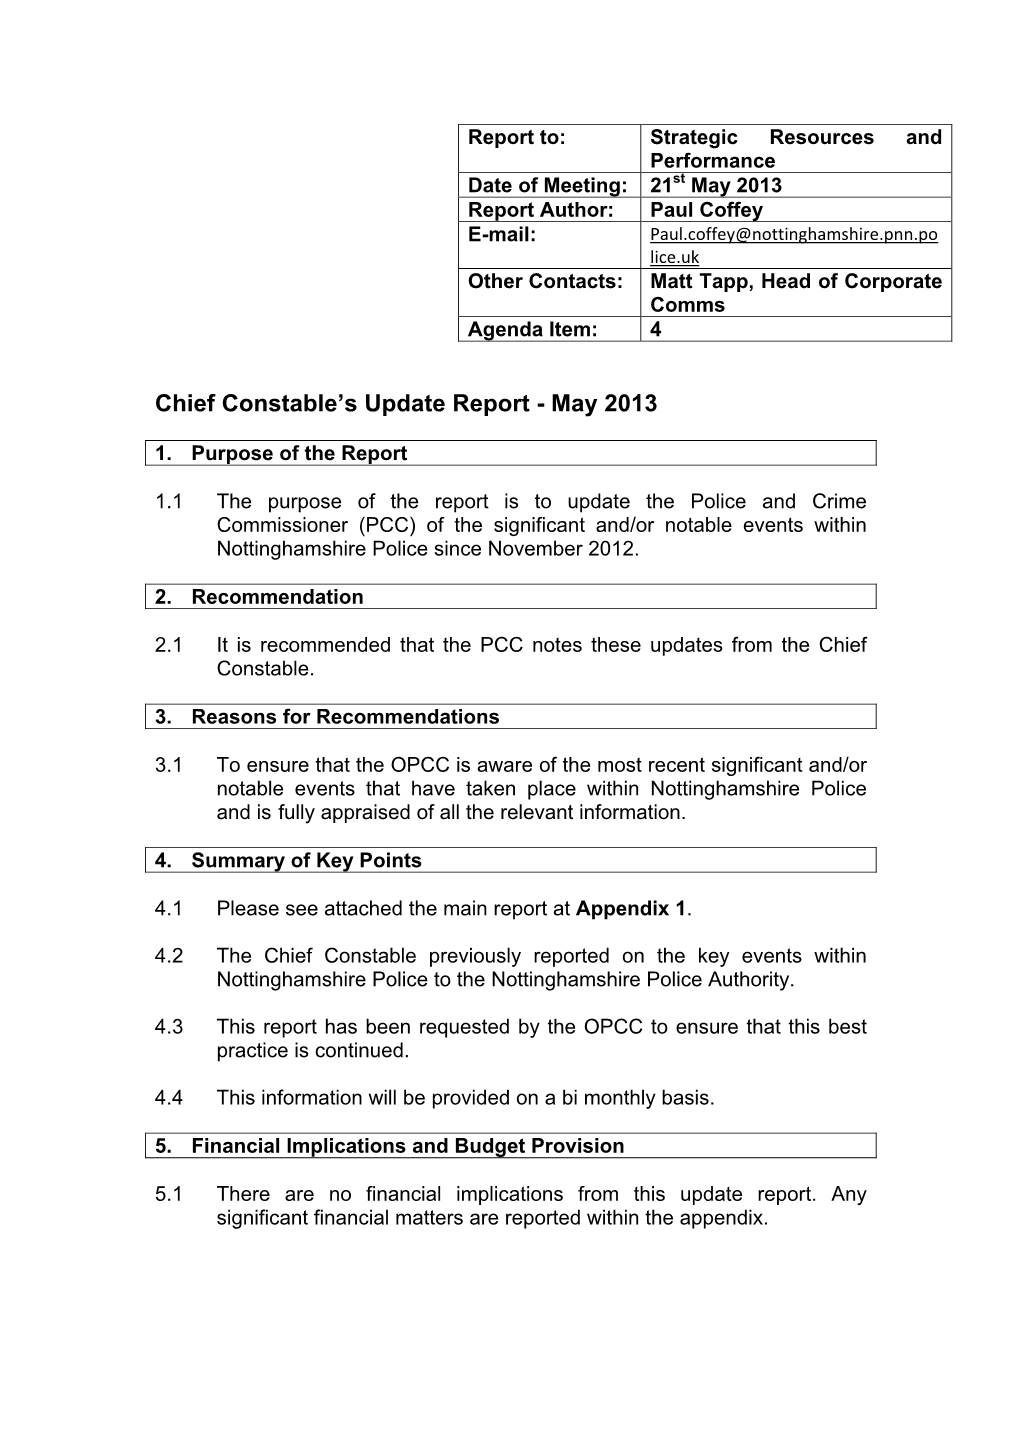 Chief Constable's Update Report